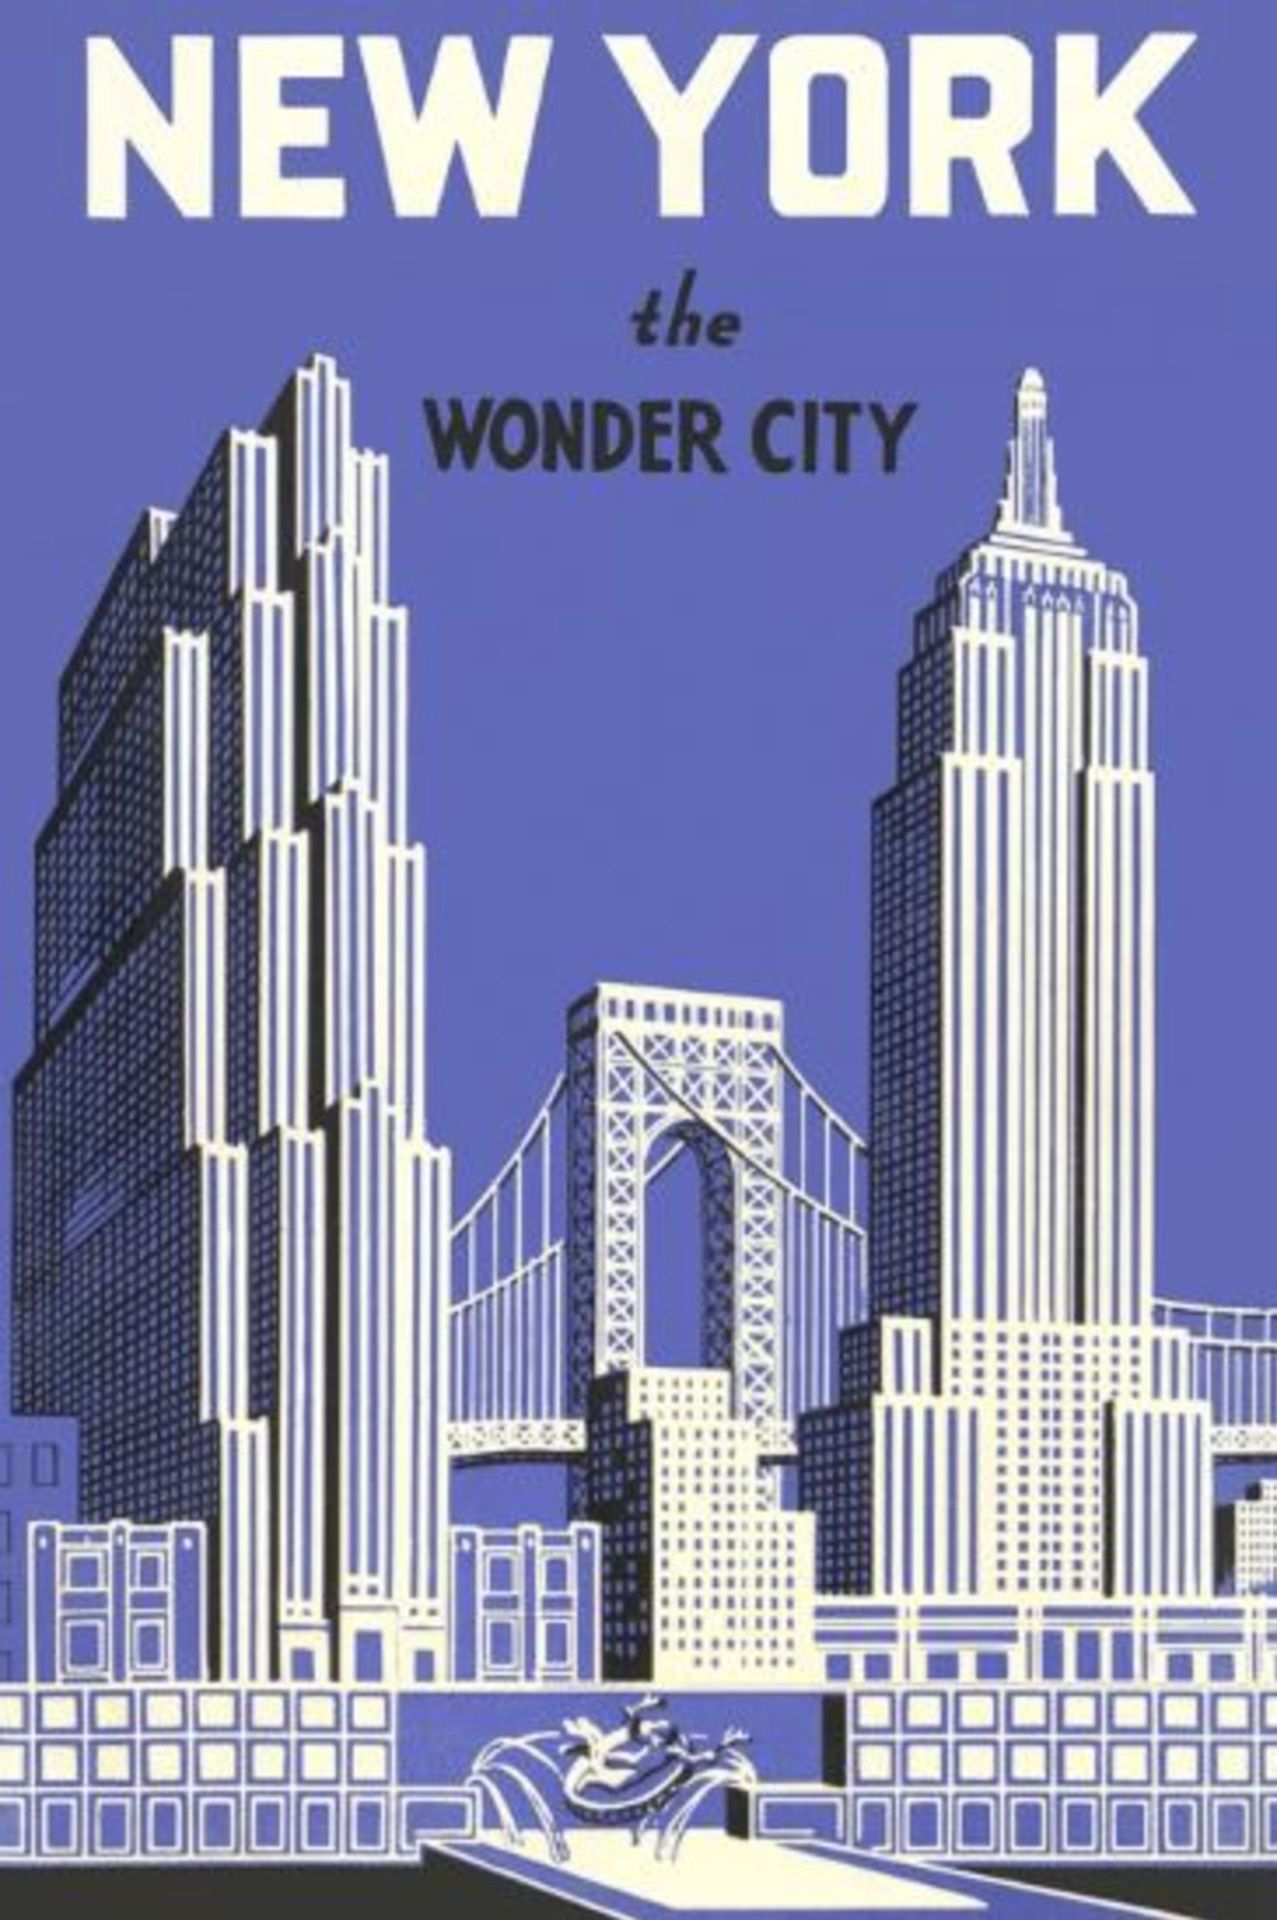 New York "The Wonder City" Travel Poster